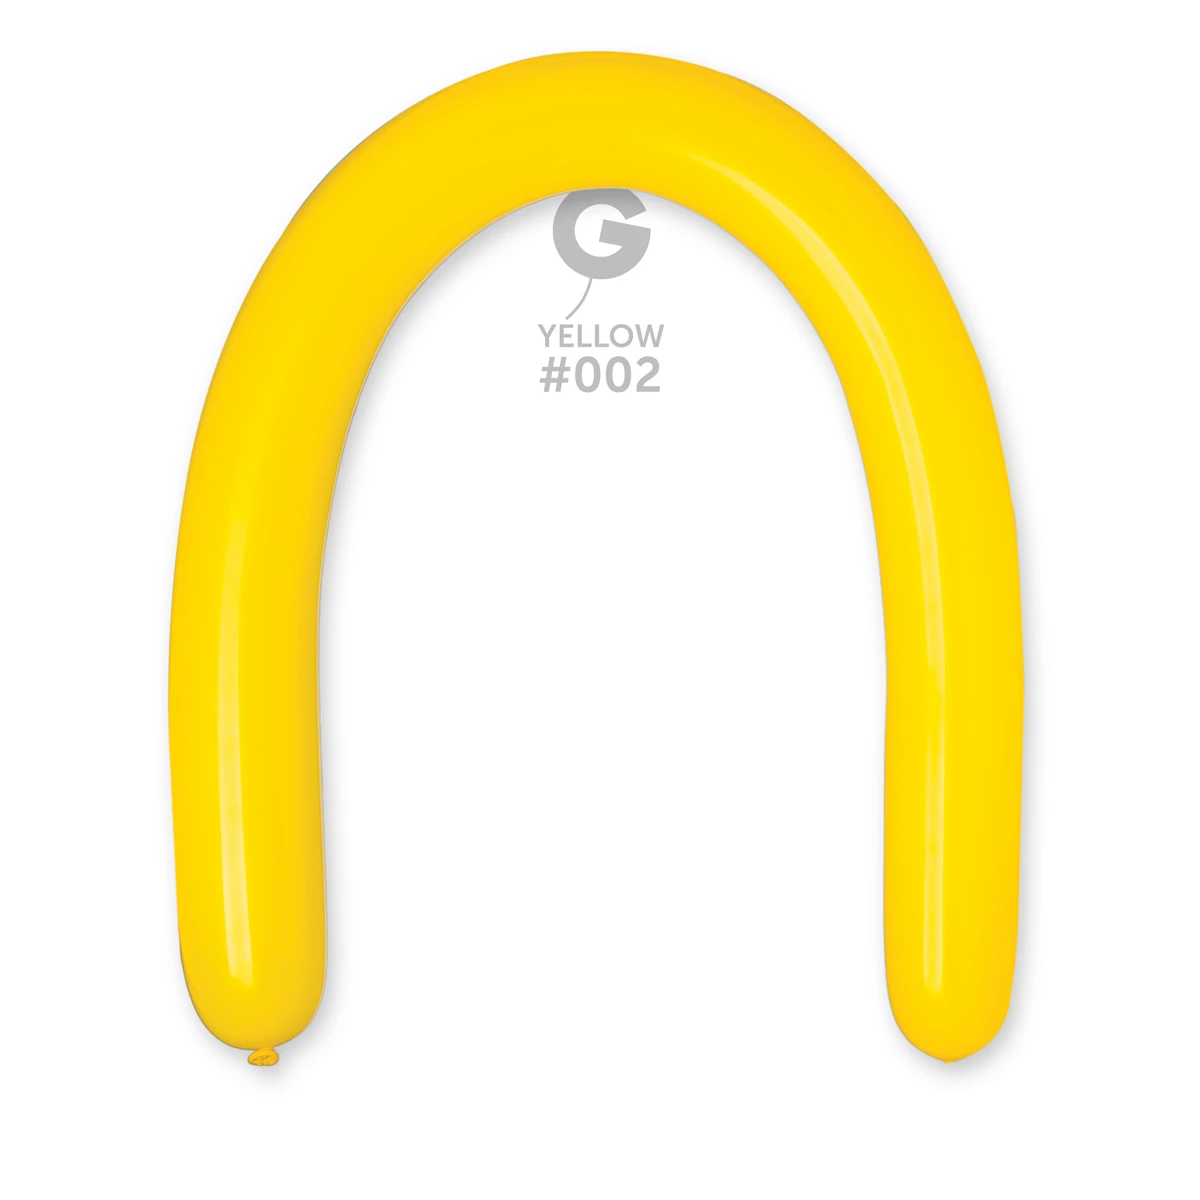 G-350 Yellow #002 latex balloons